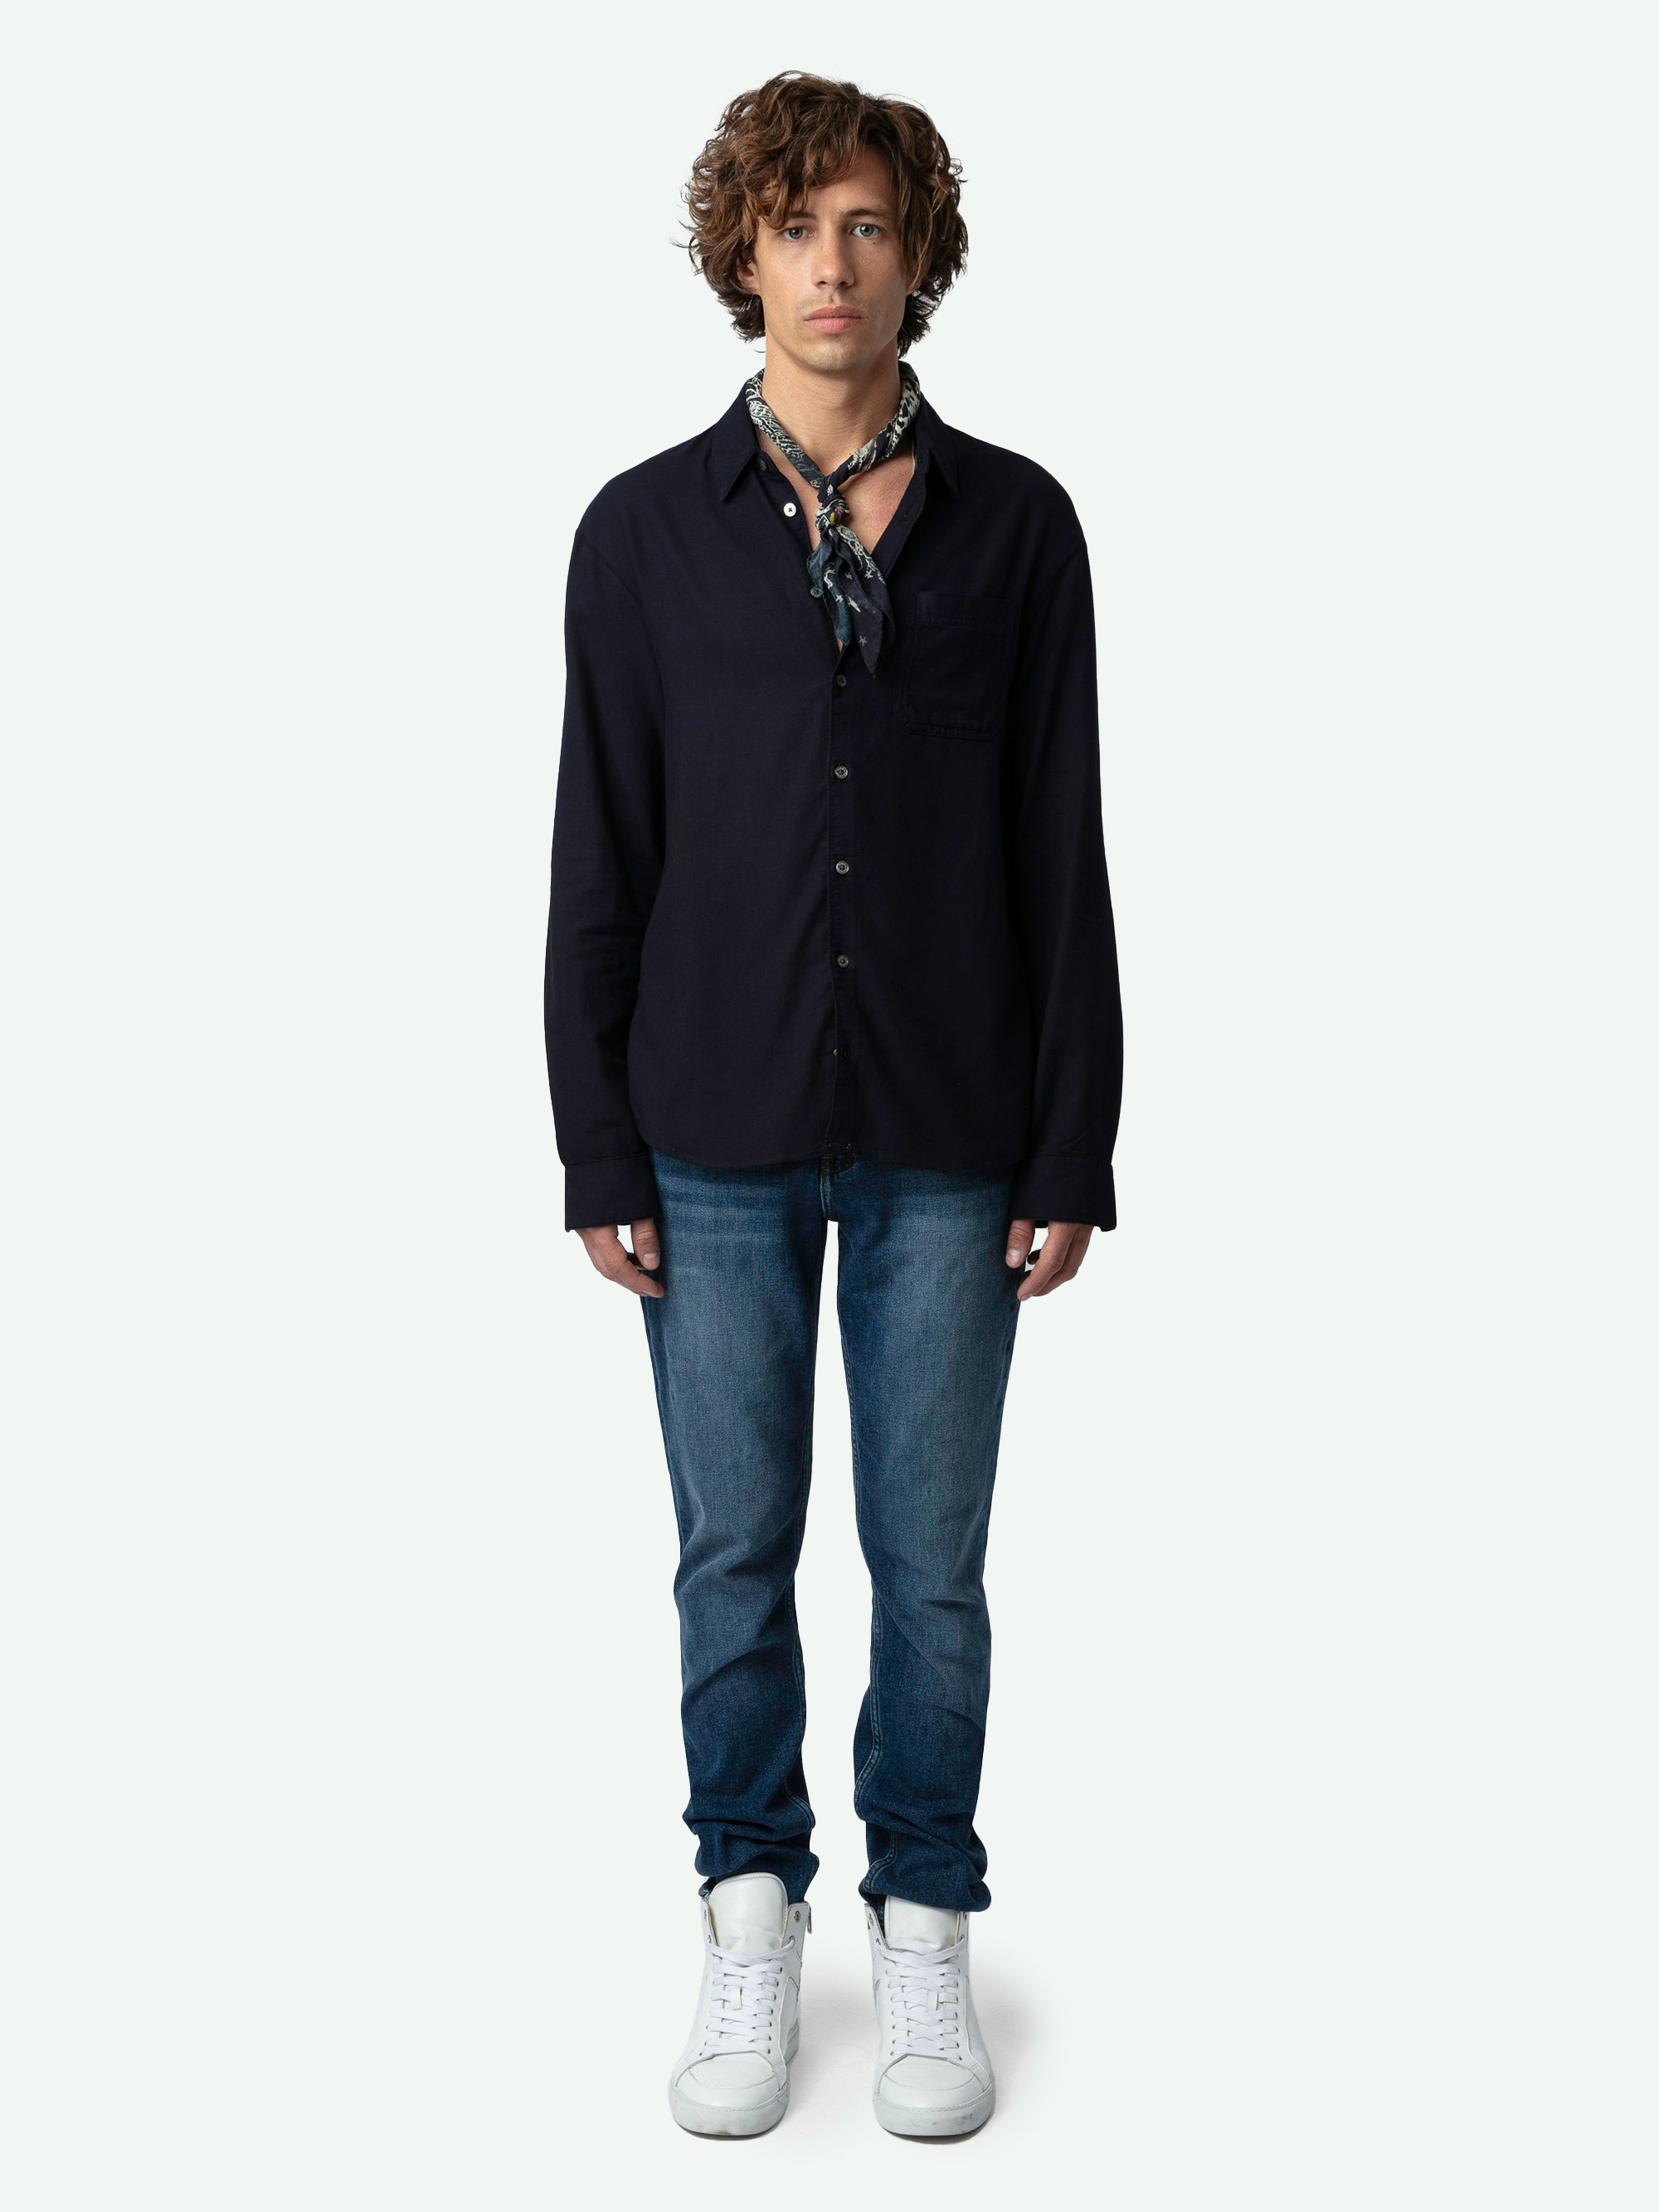 Tyrona Shirt - Long-sleeved navy blue loose shirt with pocket.